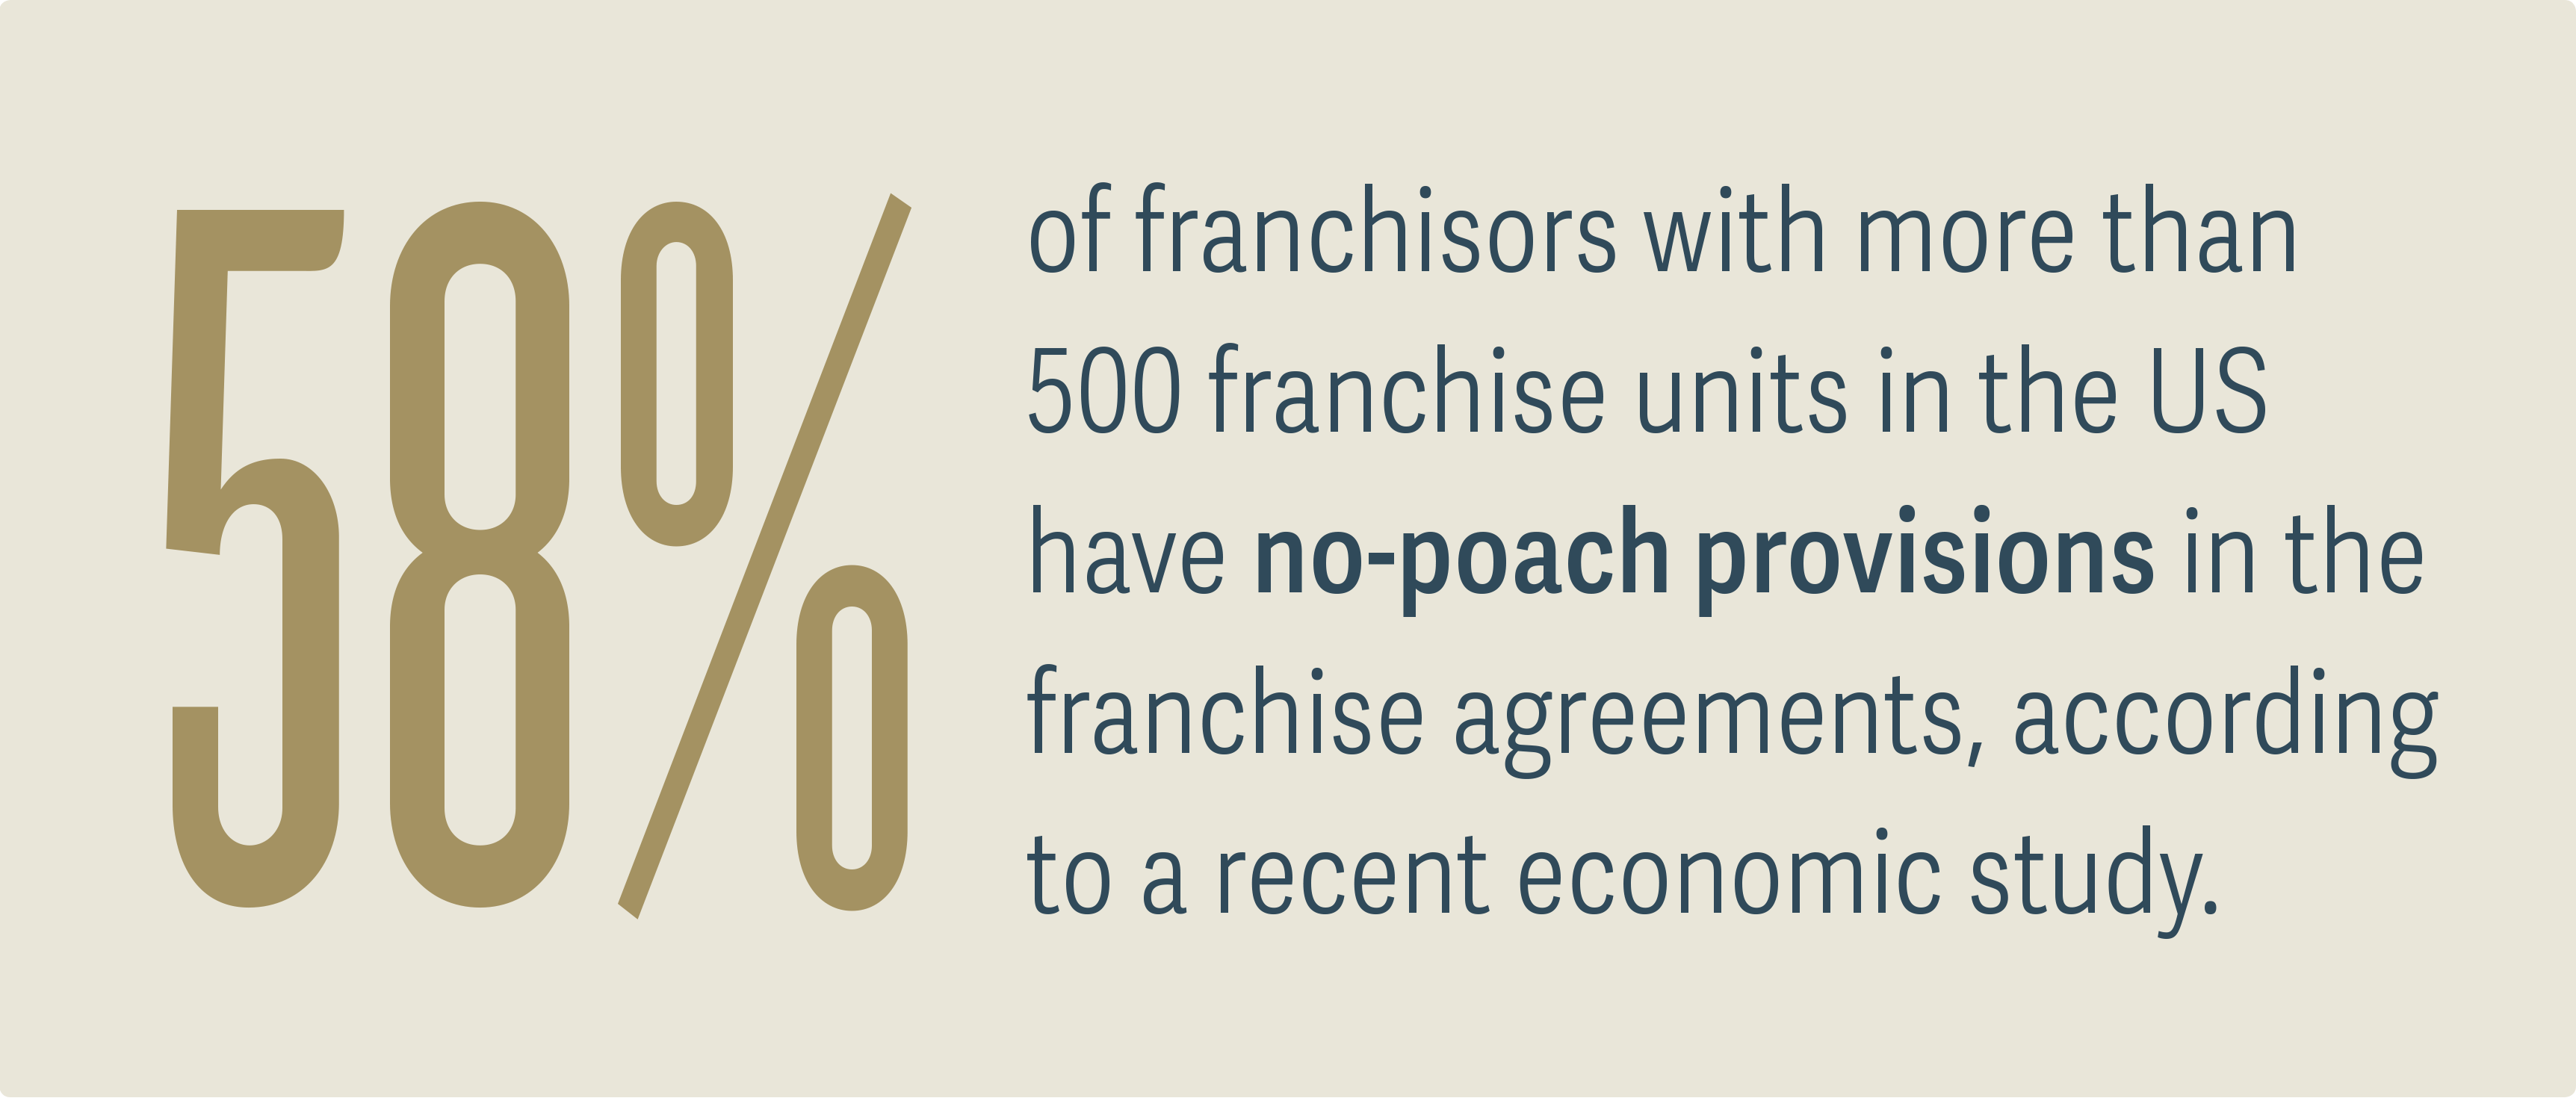 Franchise No-Poach Agreements Face Antitrust Scrutiny - Figure 1